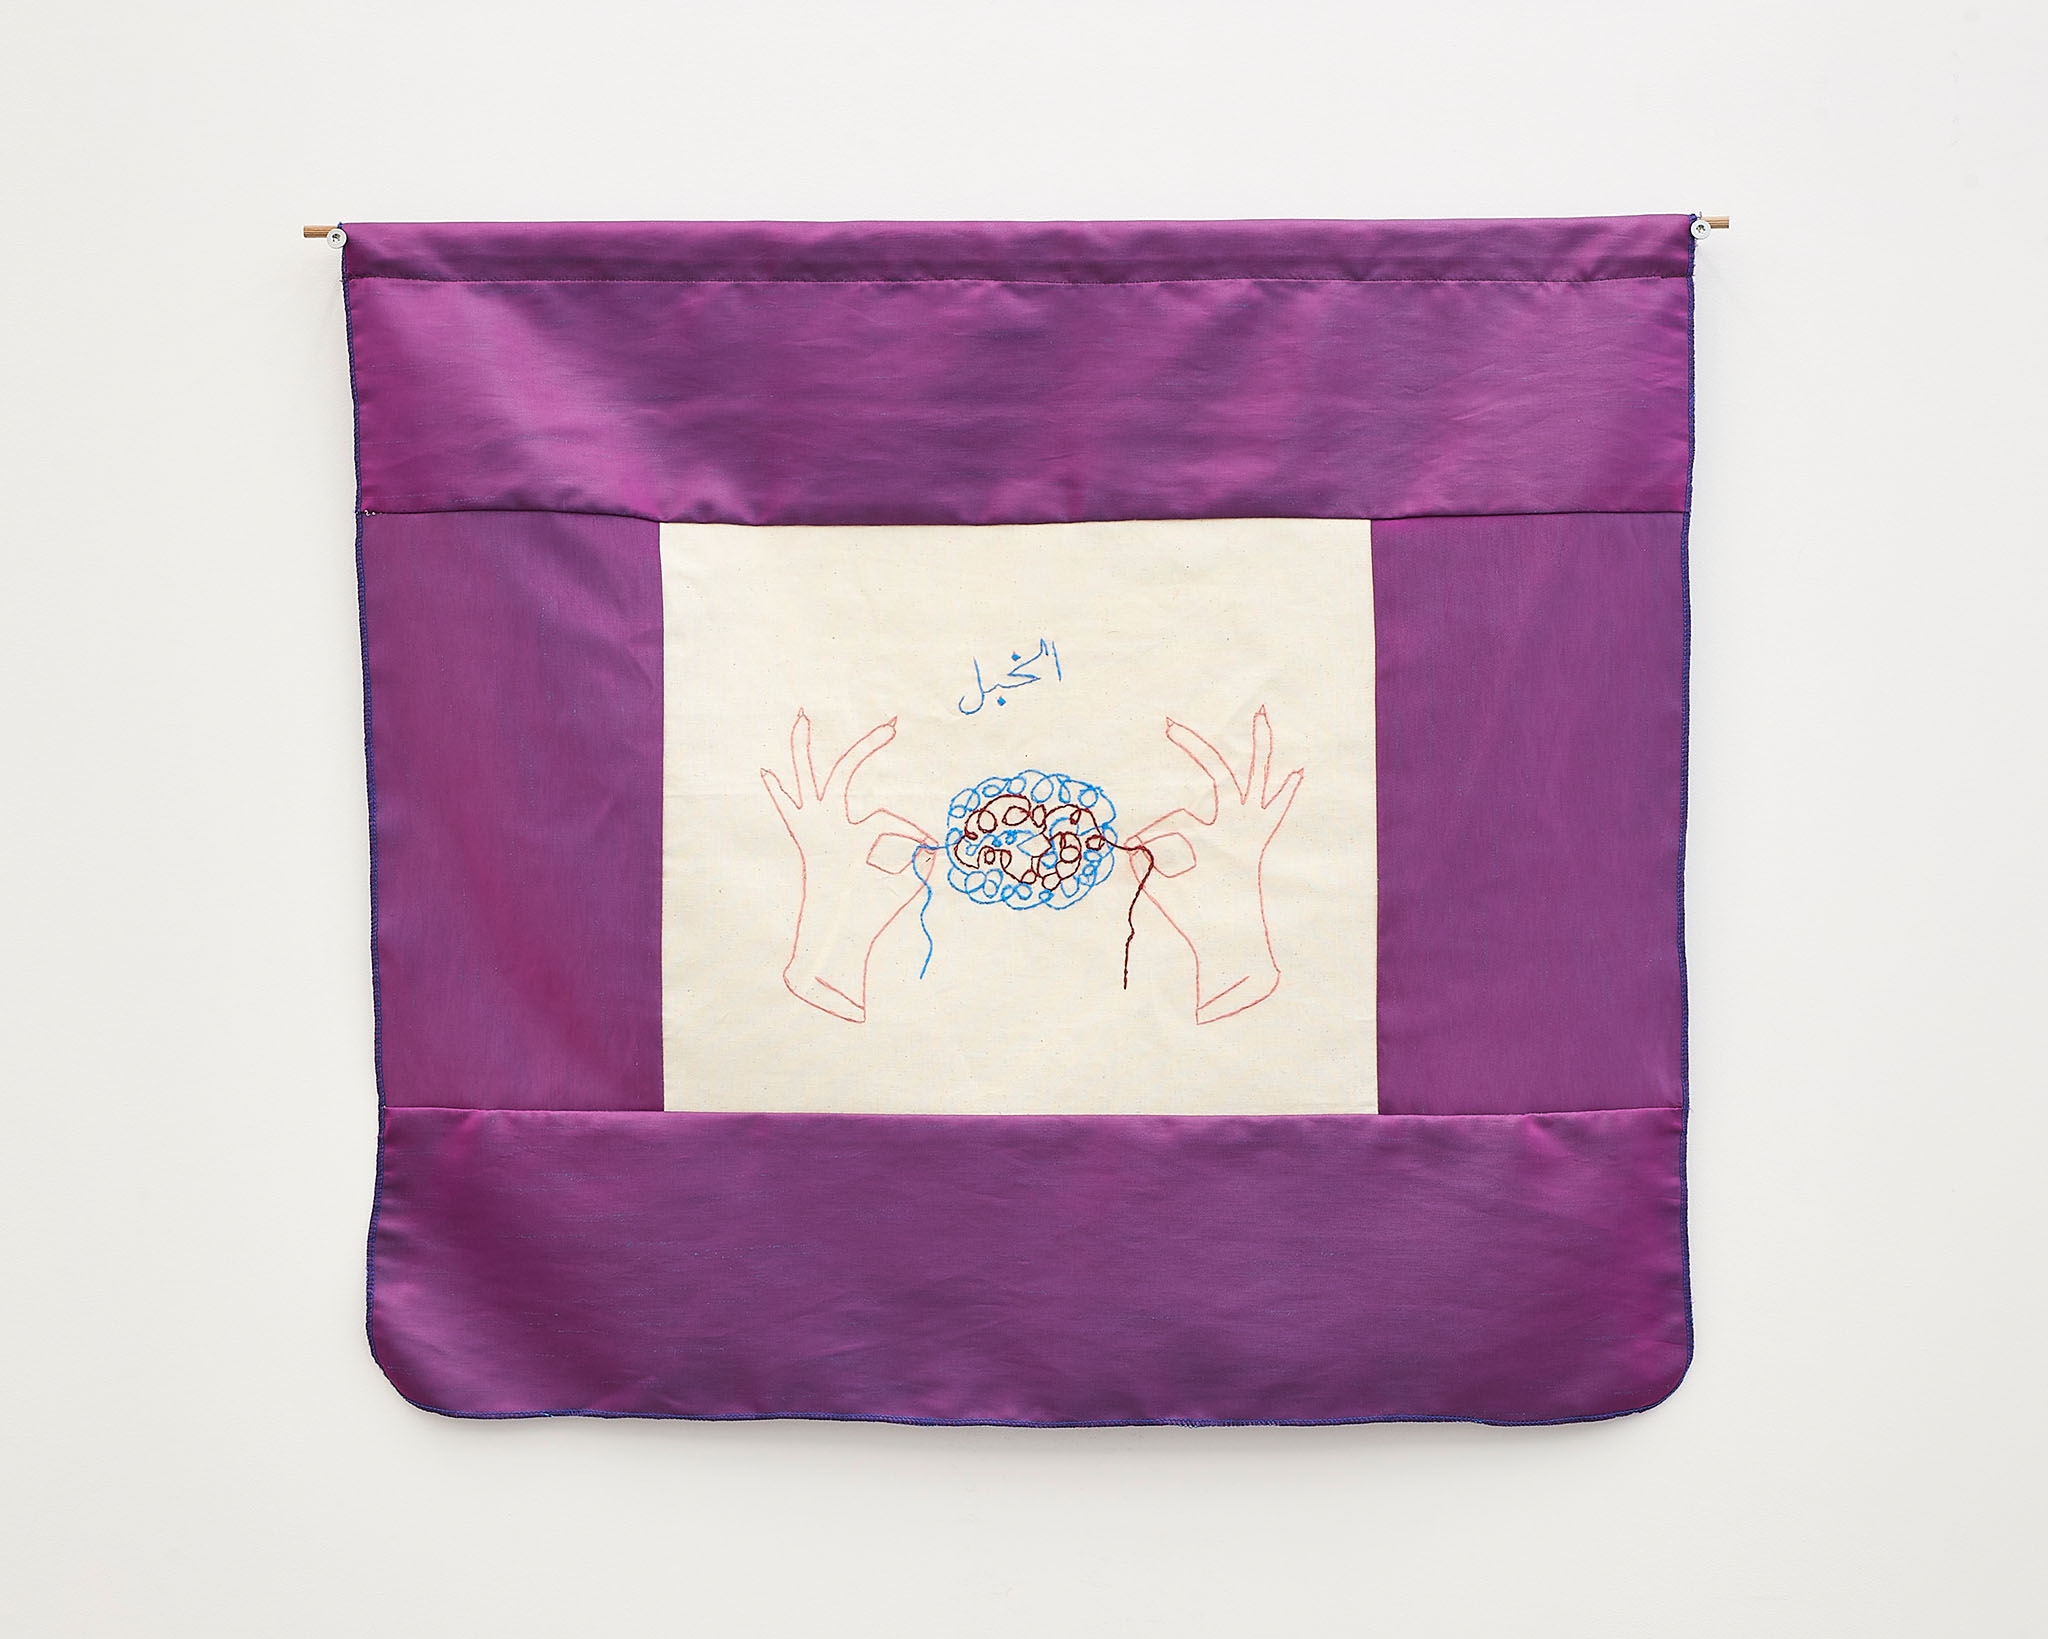 Mounira Al Solh, In Love in Blood, al khabal, 2023, Embroidery on textile, 60 x 66,5 cm